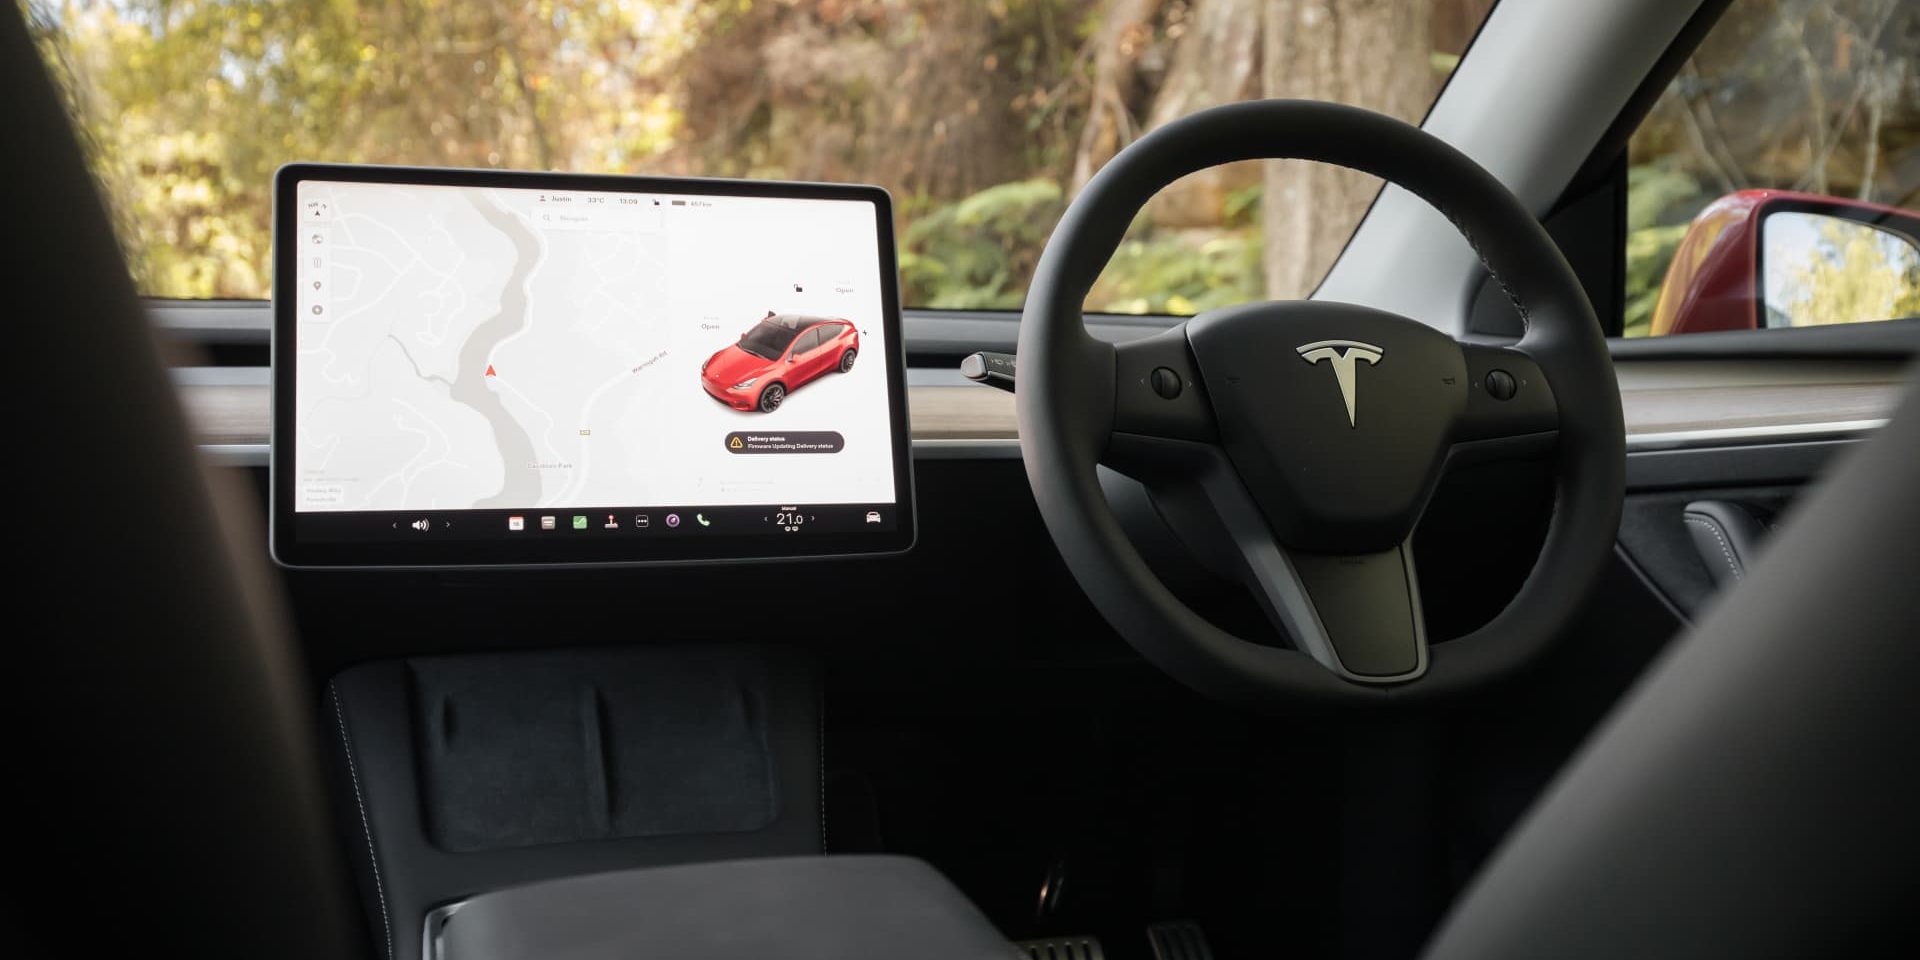 Tesla ‘Full Self-Driving’ software testing in Australia – report